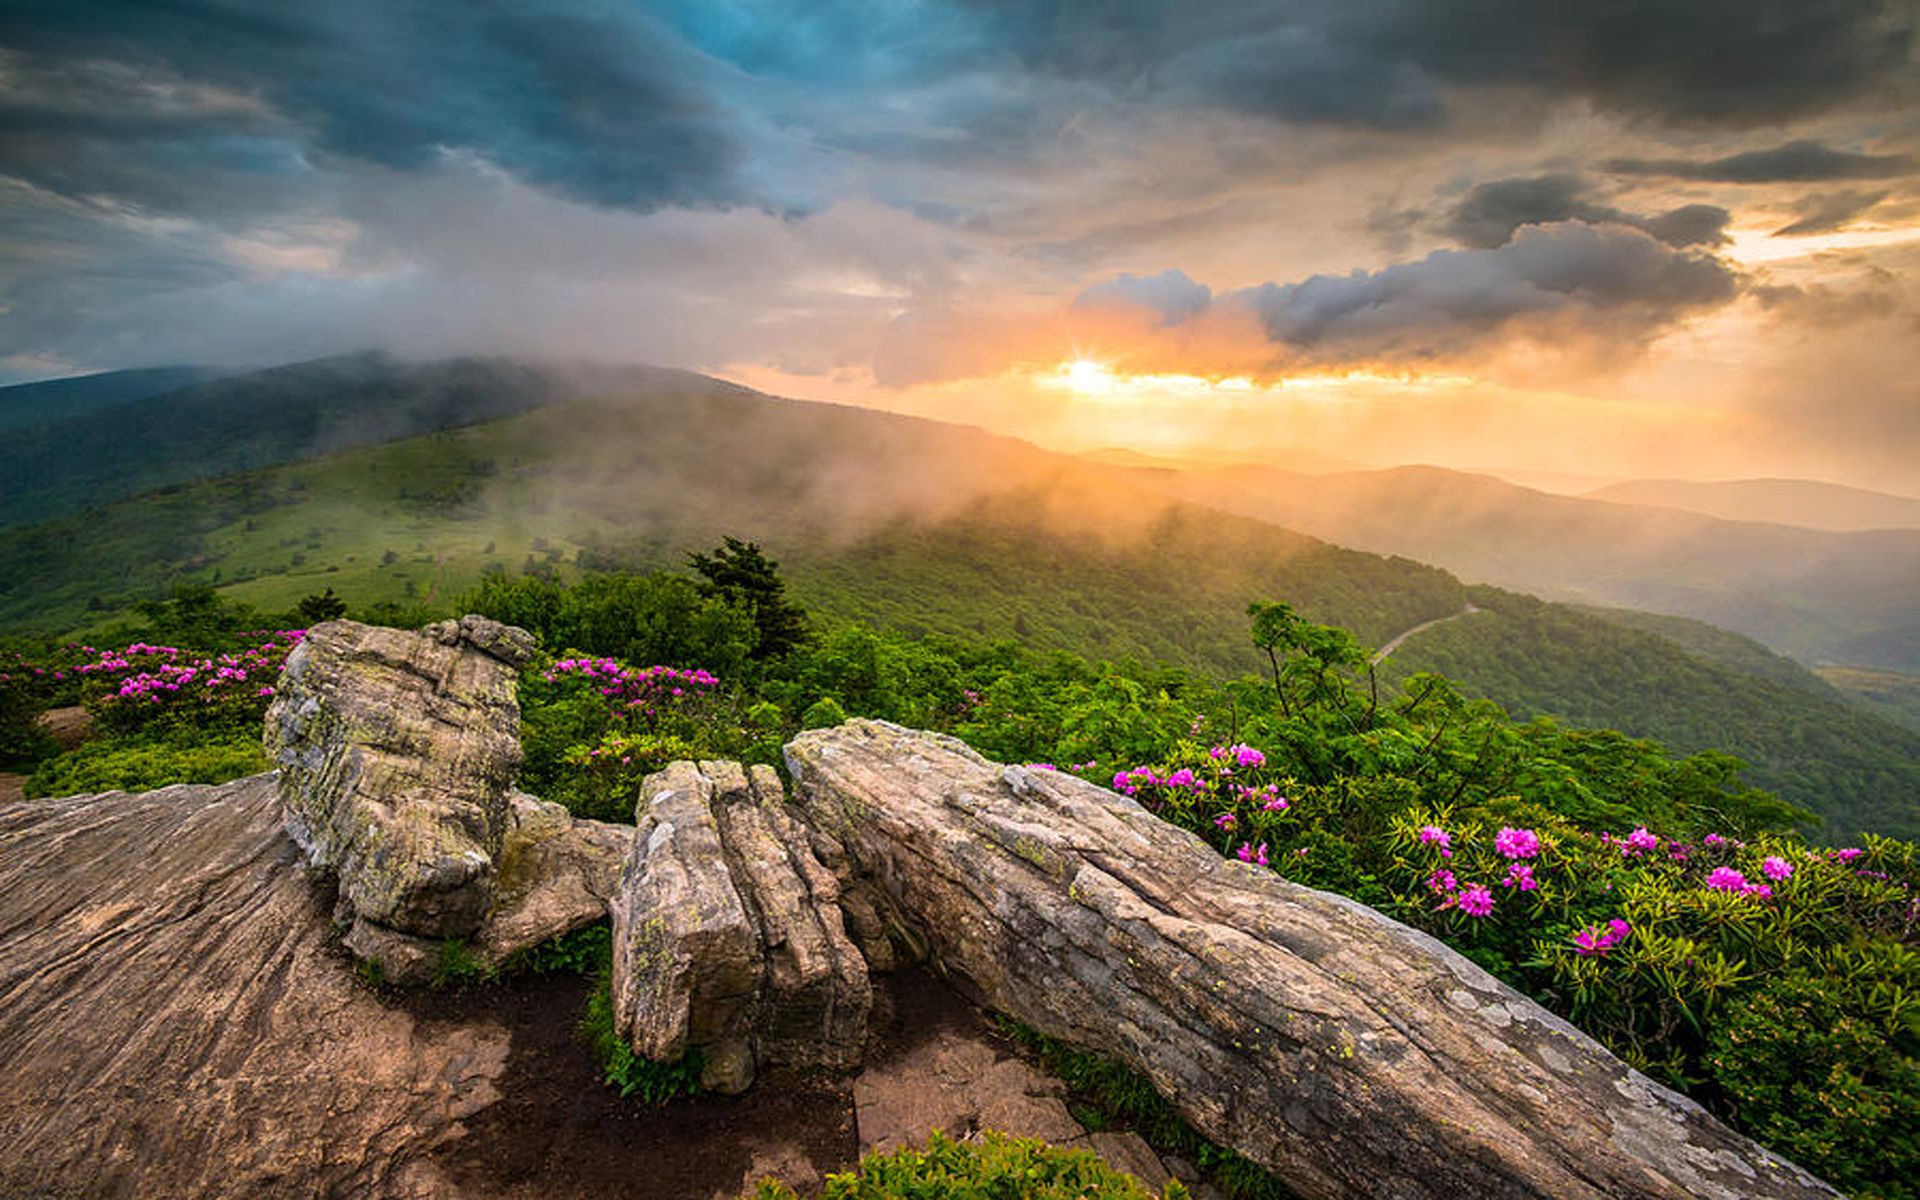 Appalachian Mountains Wallpaper FREE Picture